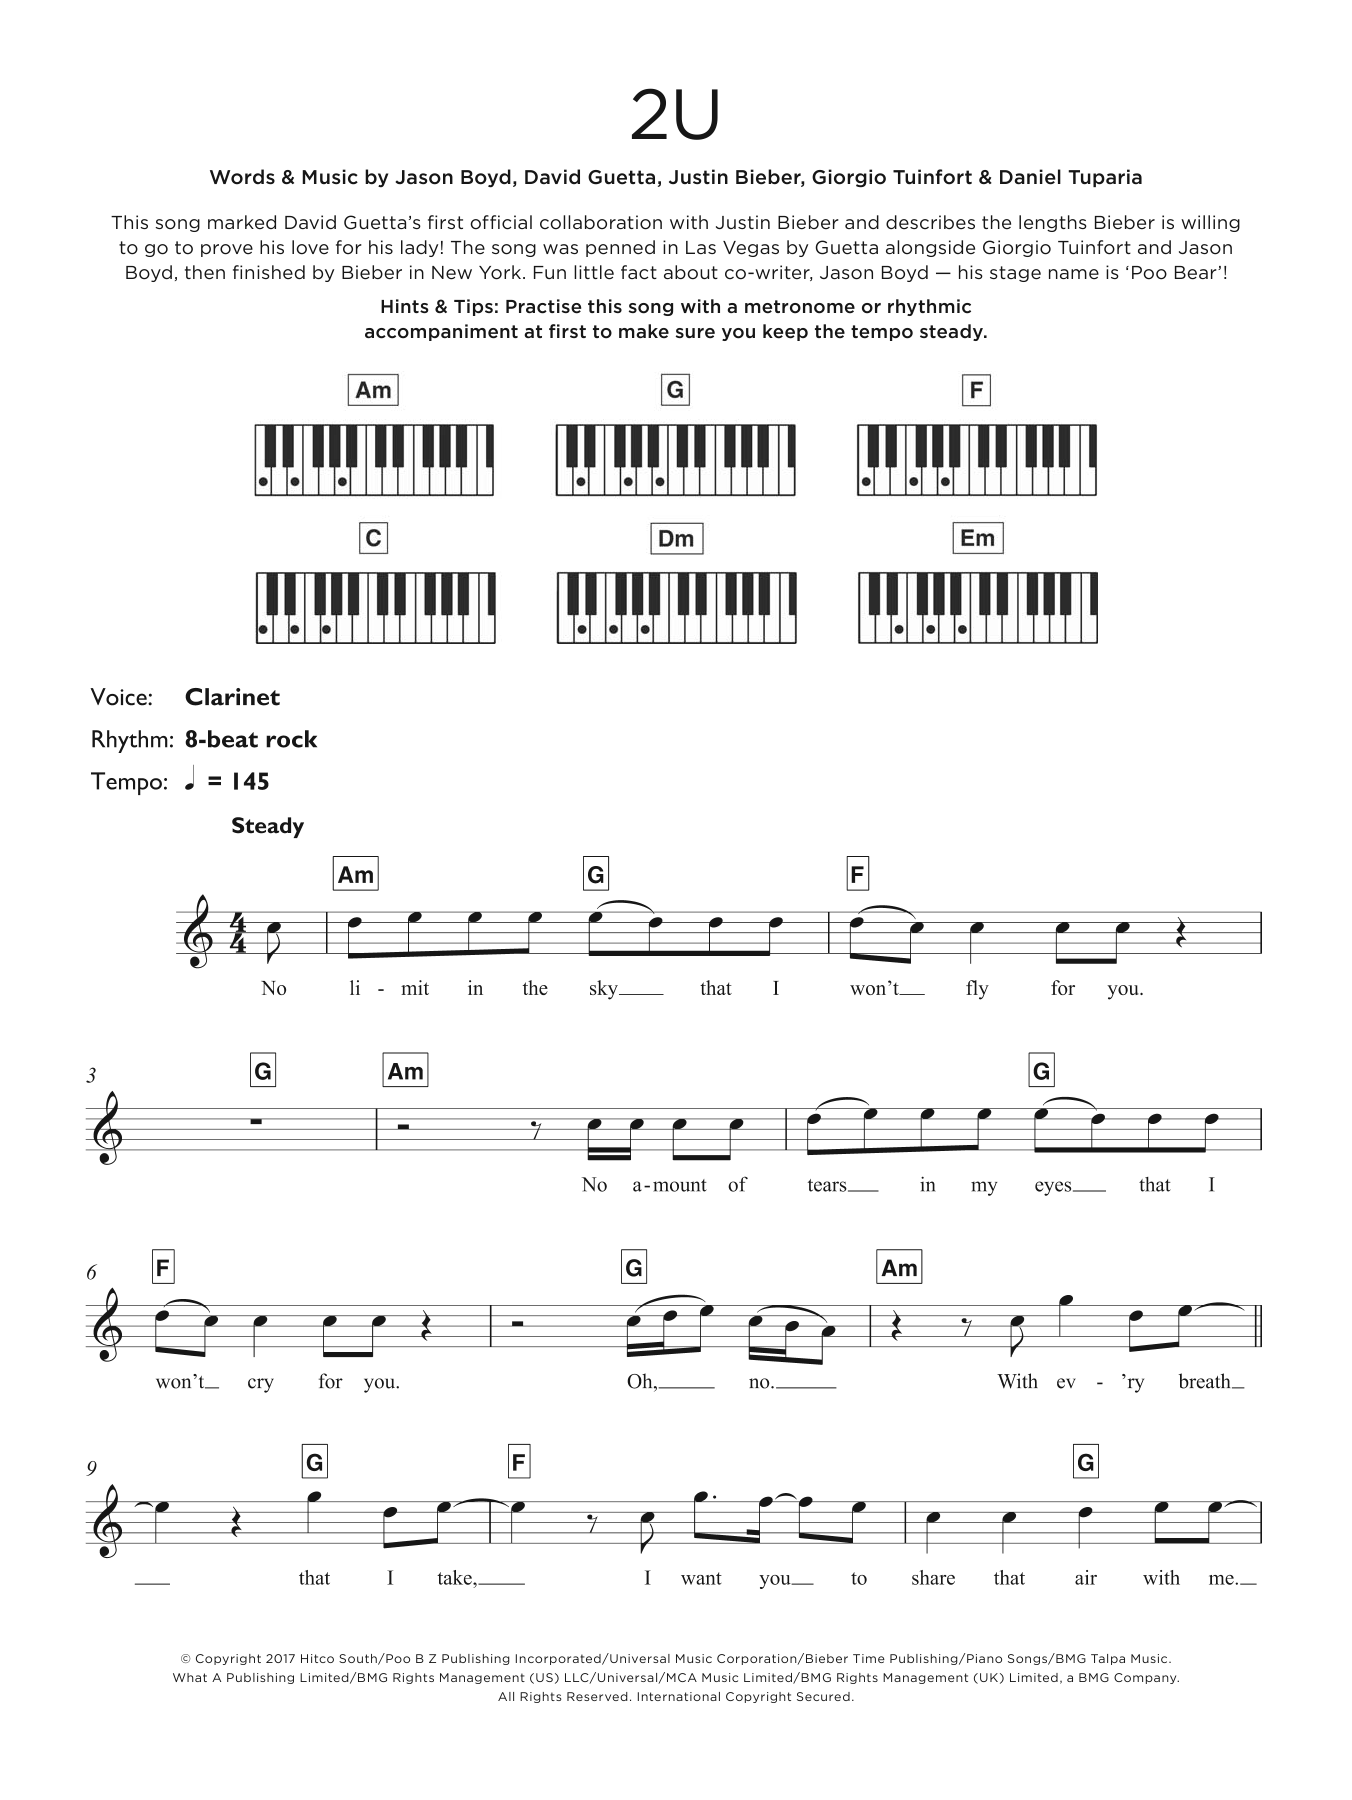 David Guetta 2U (feat. Justin Bieber) sheet music notes and chords. Download Printable PDF.